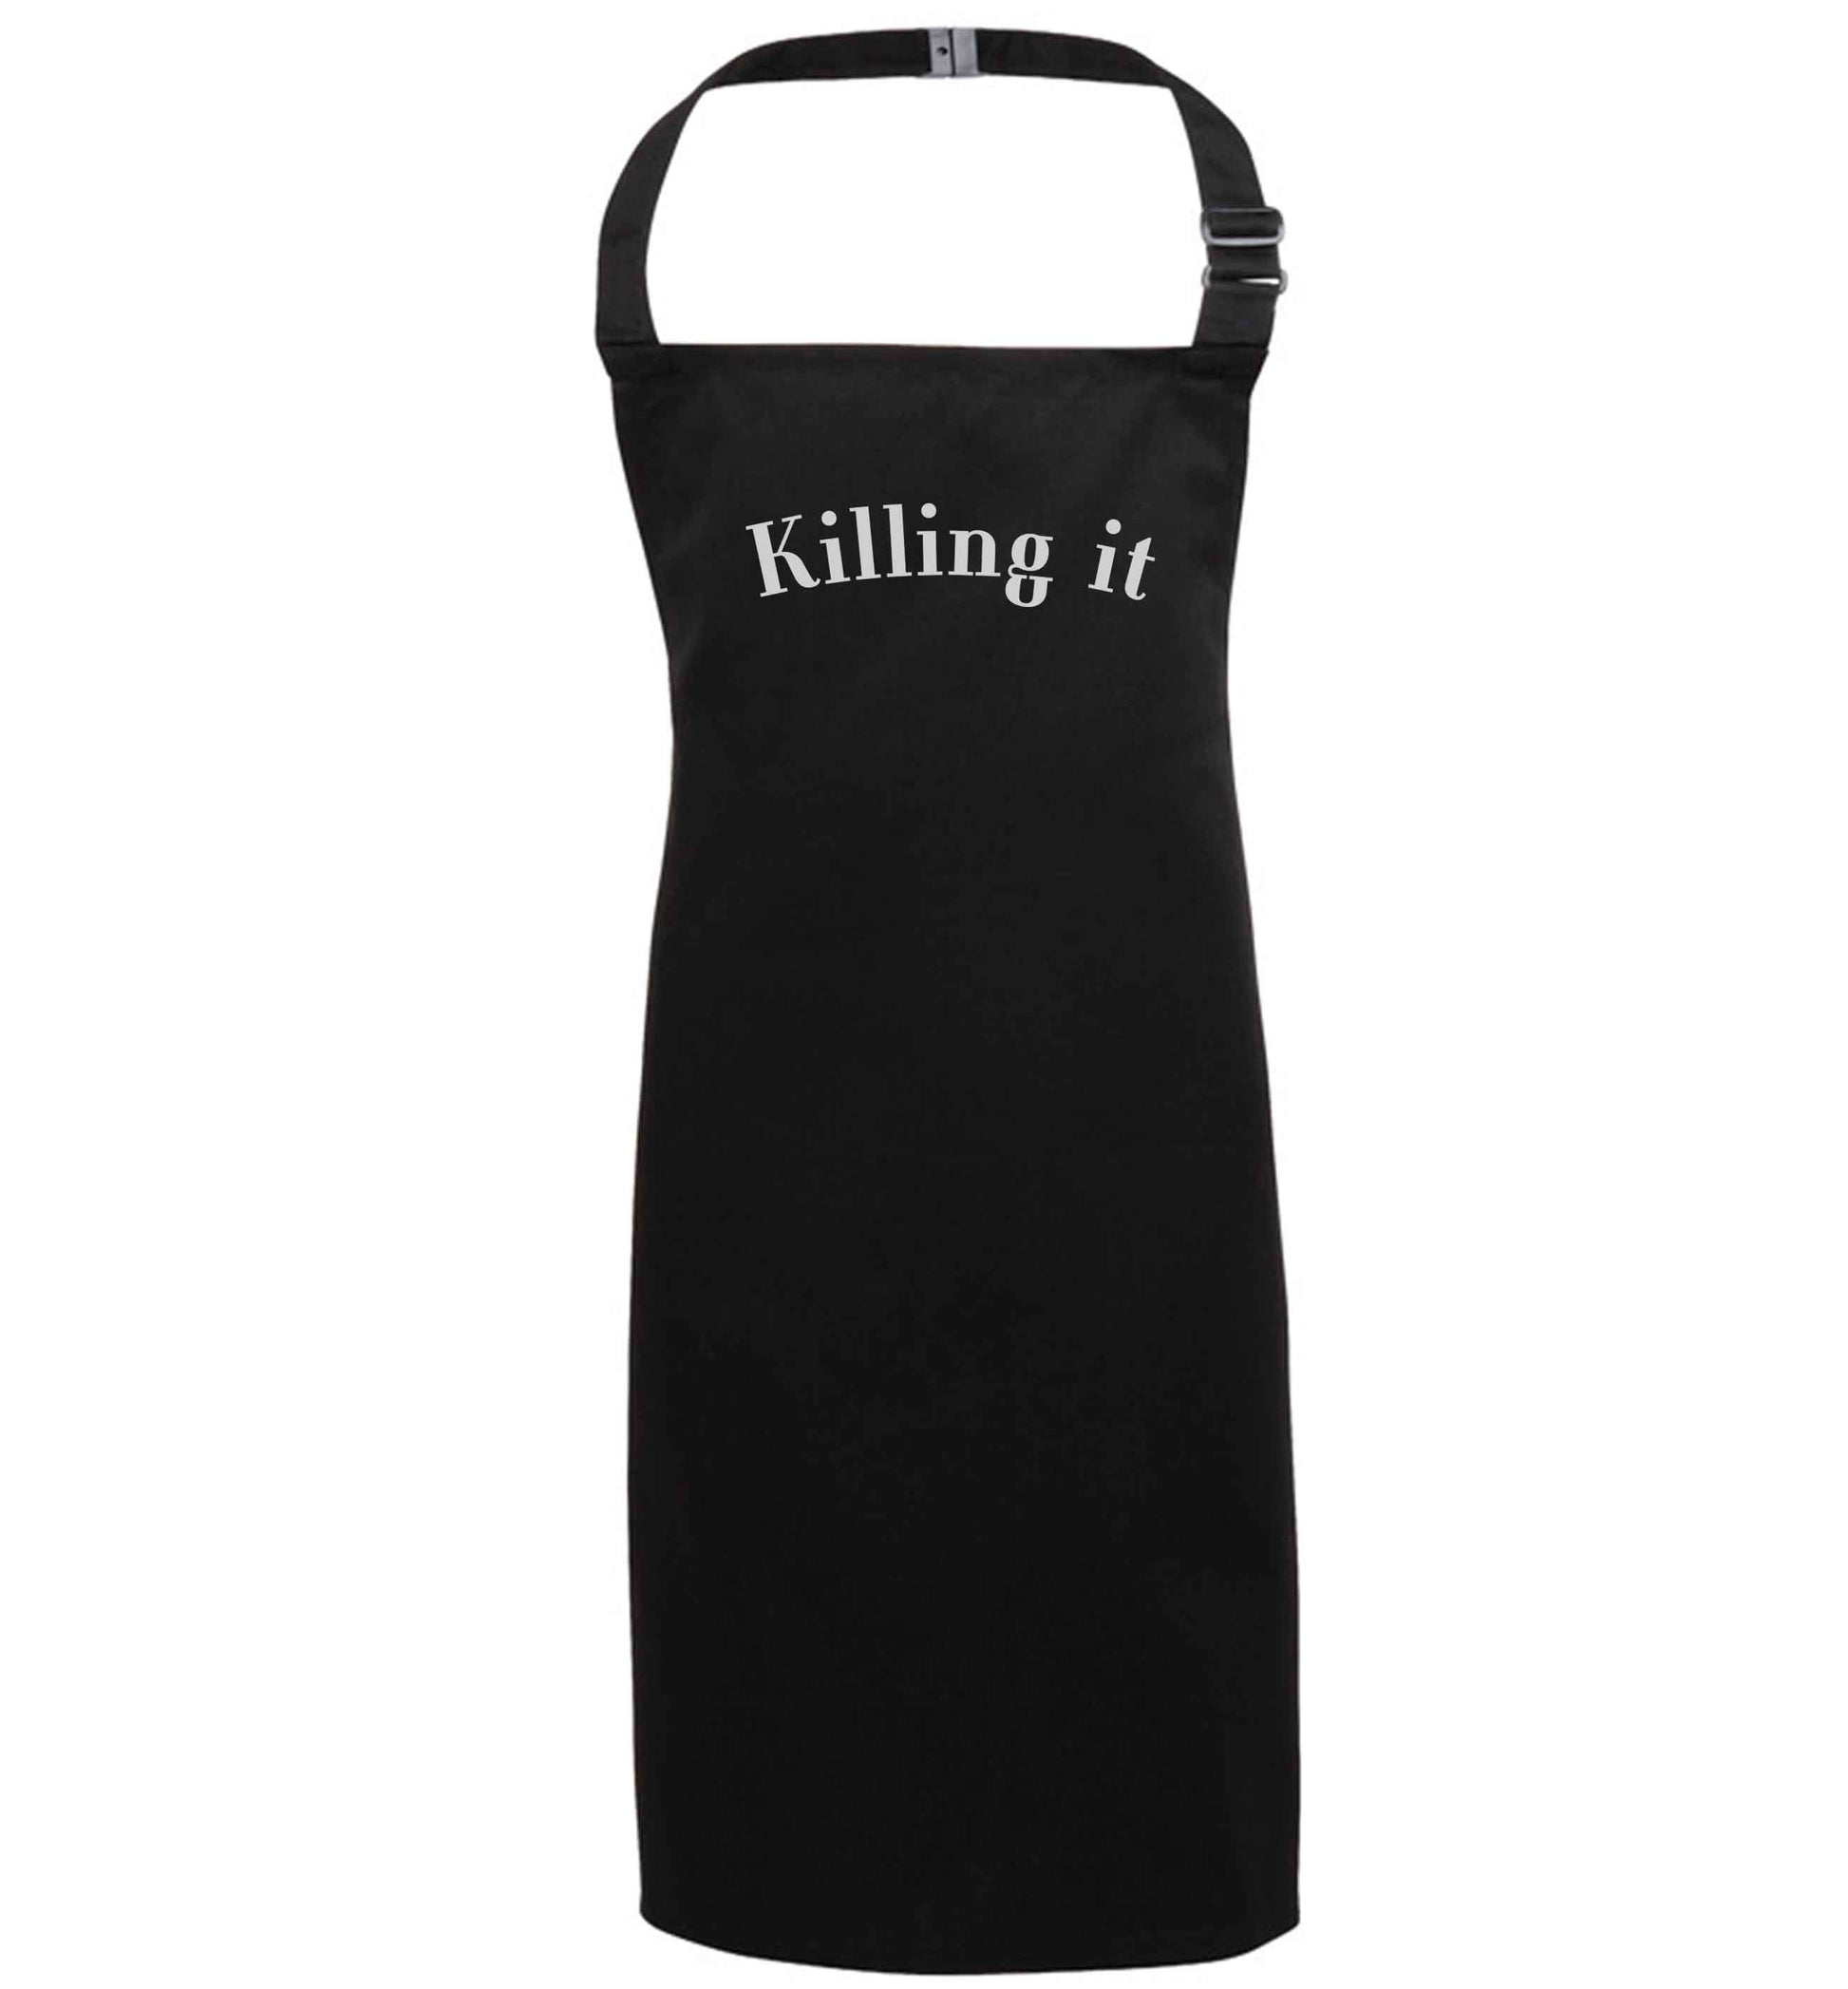 Killing it black apron 7-10 years